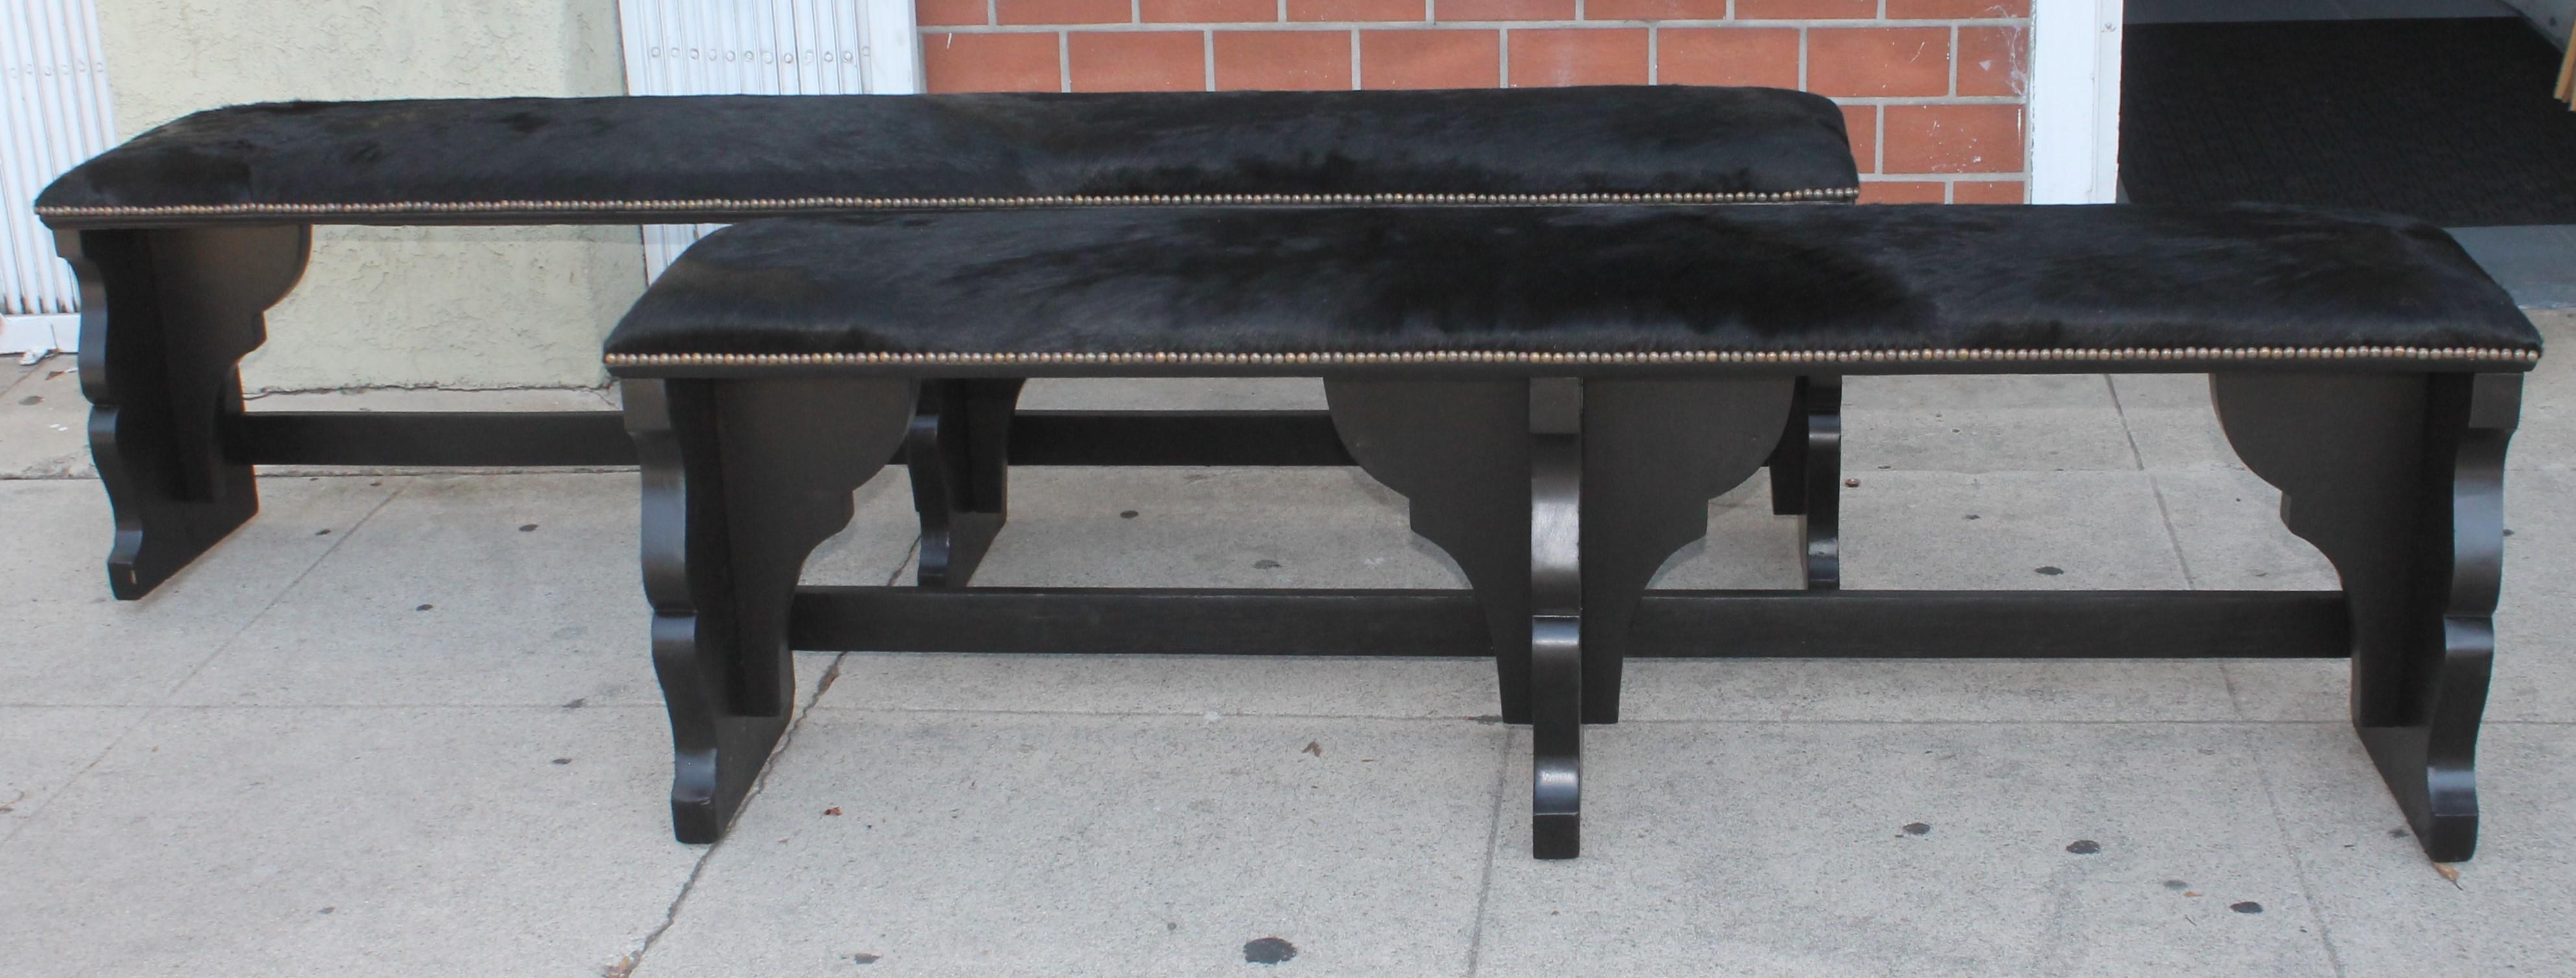 rustic cowhide bench